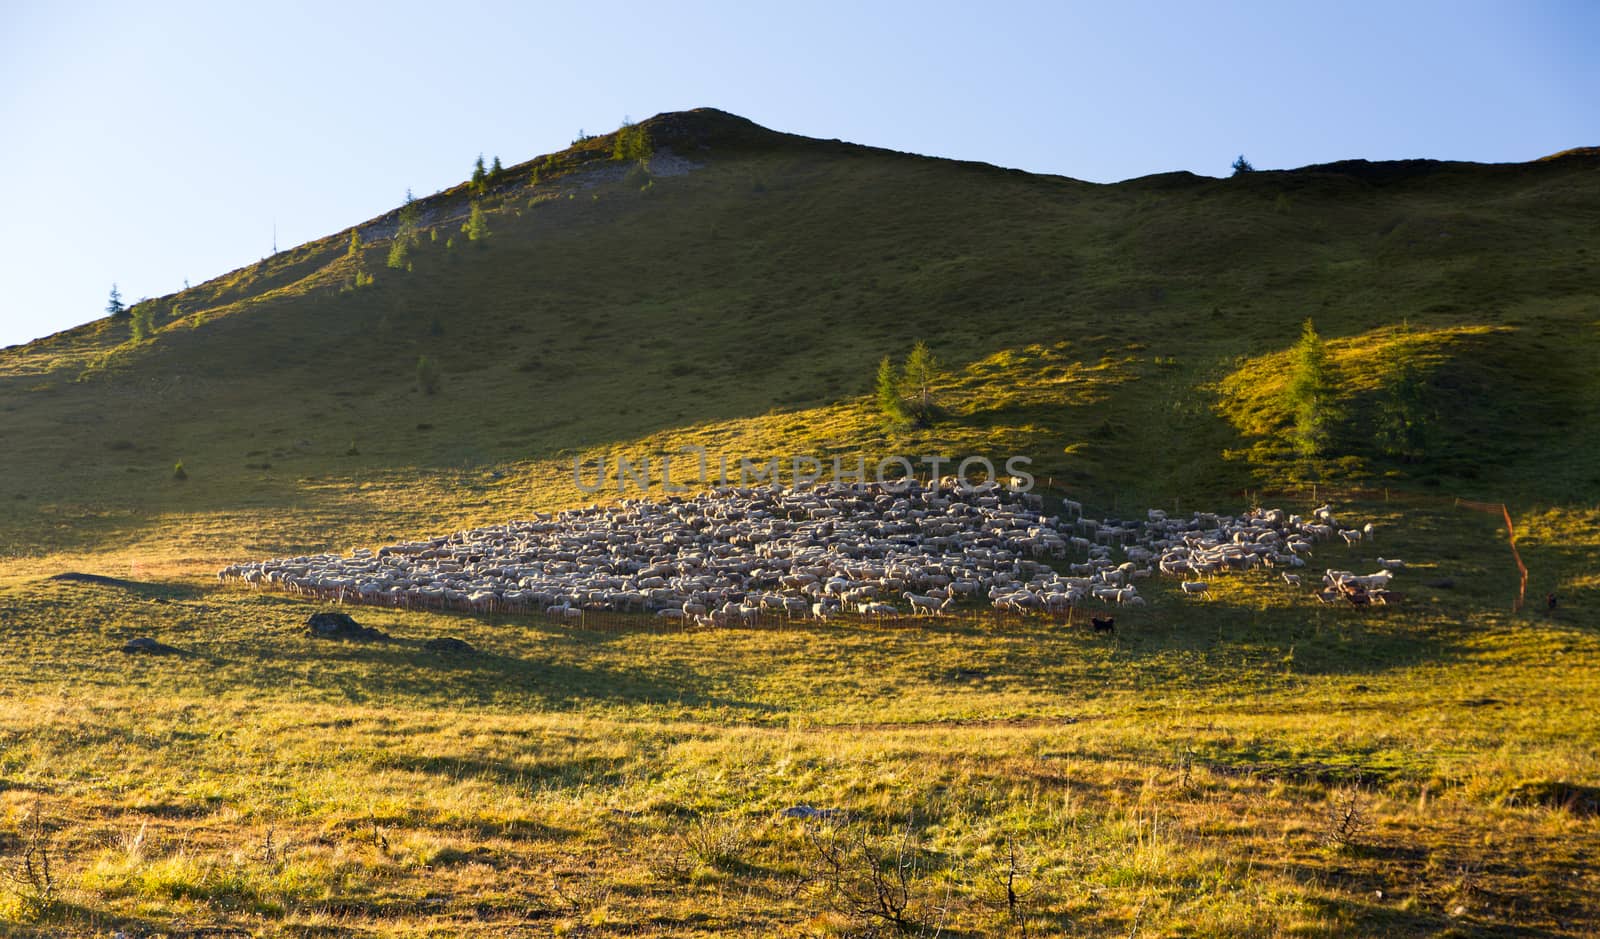 Herd of sheep in Dolomites, Italy